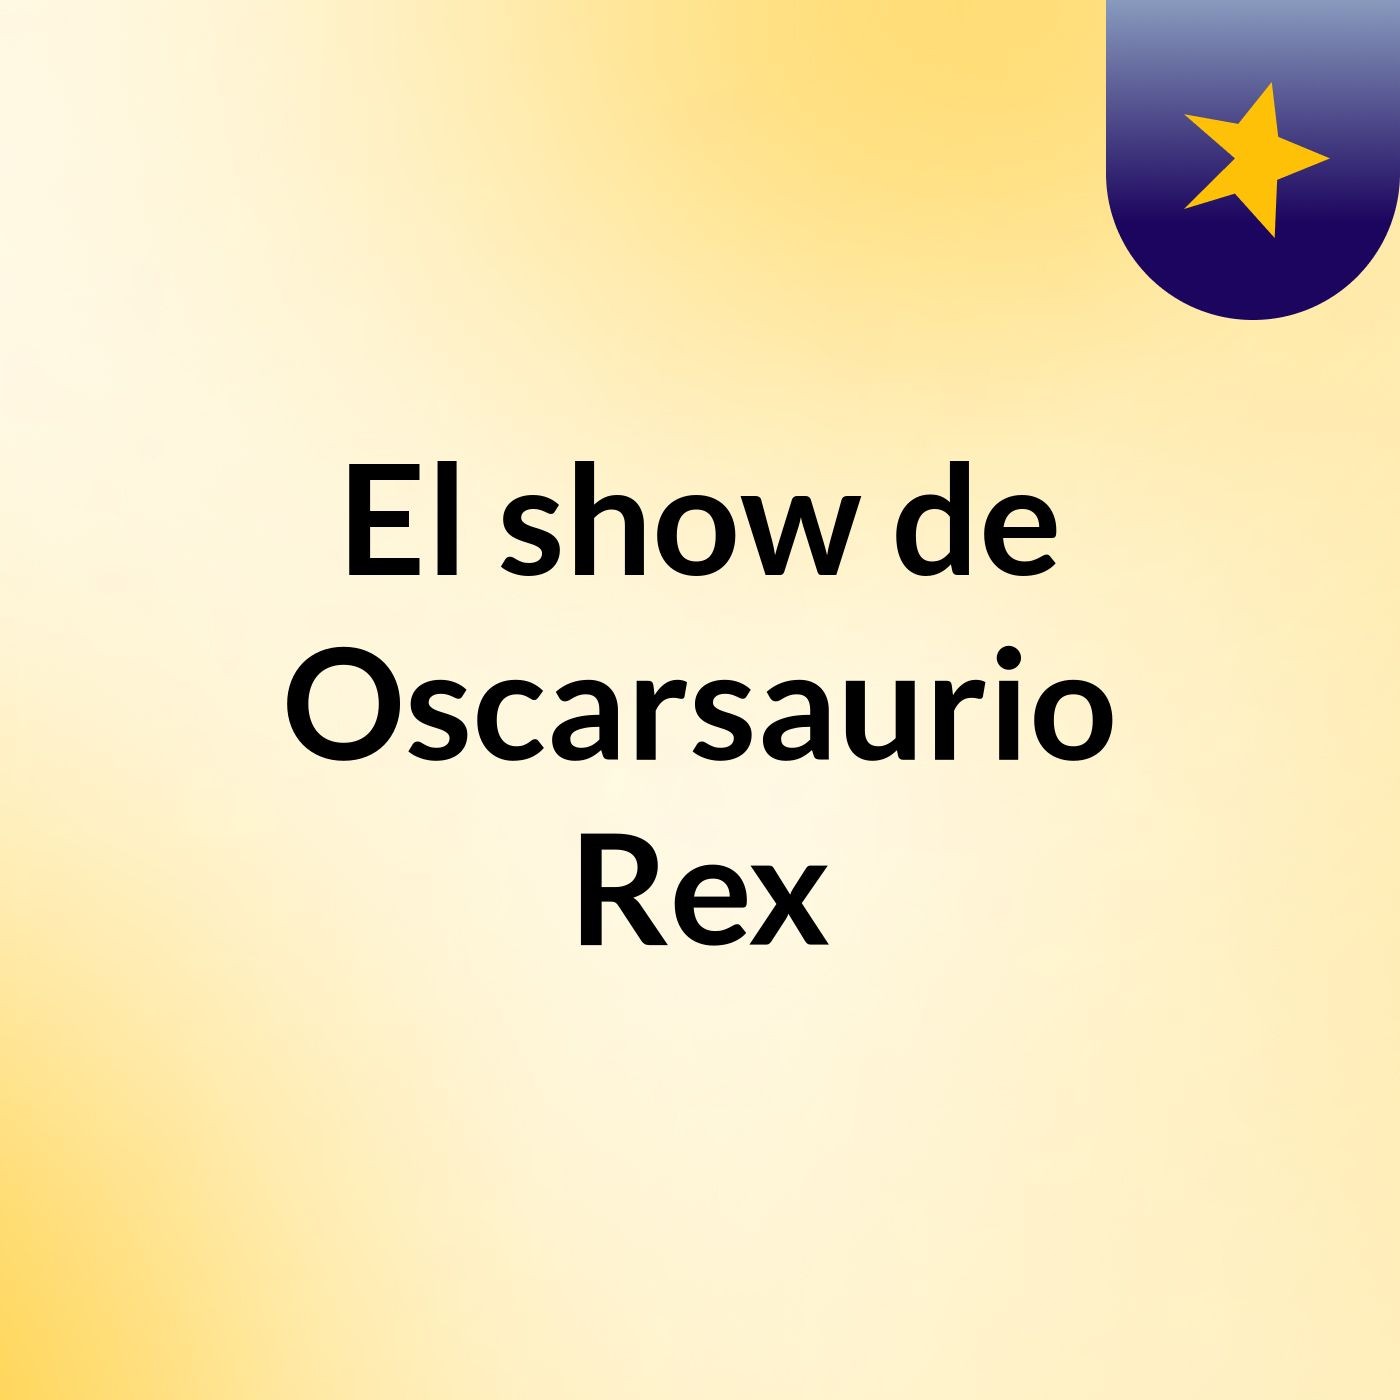 El show de Oscarsaurio Rex